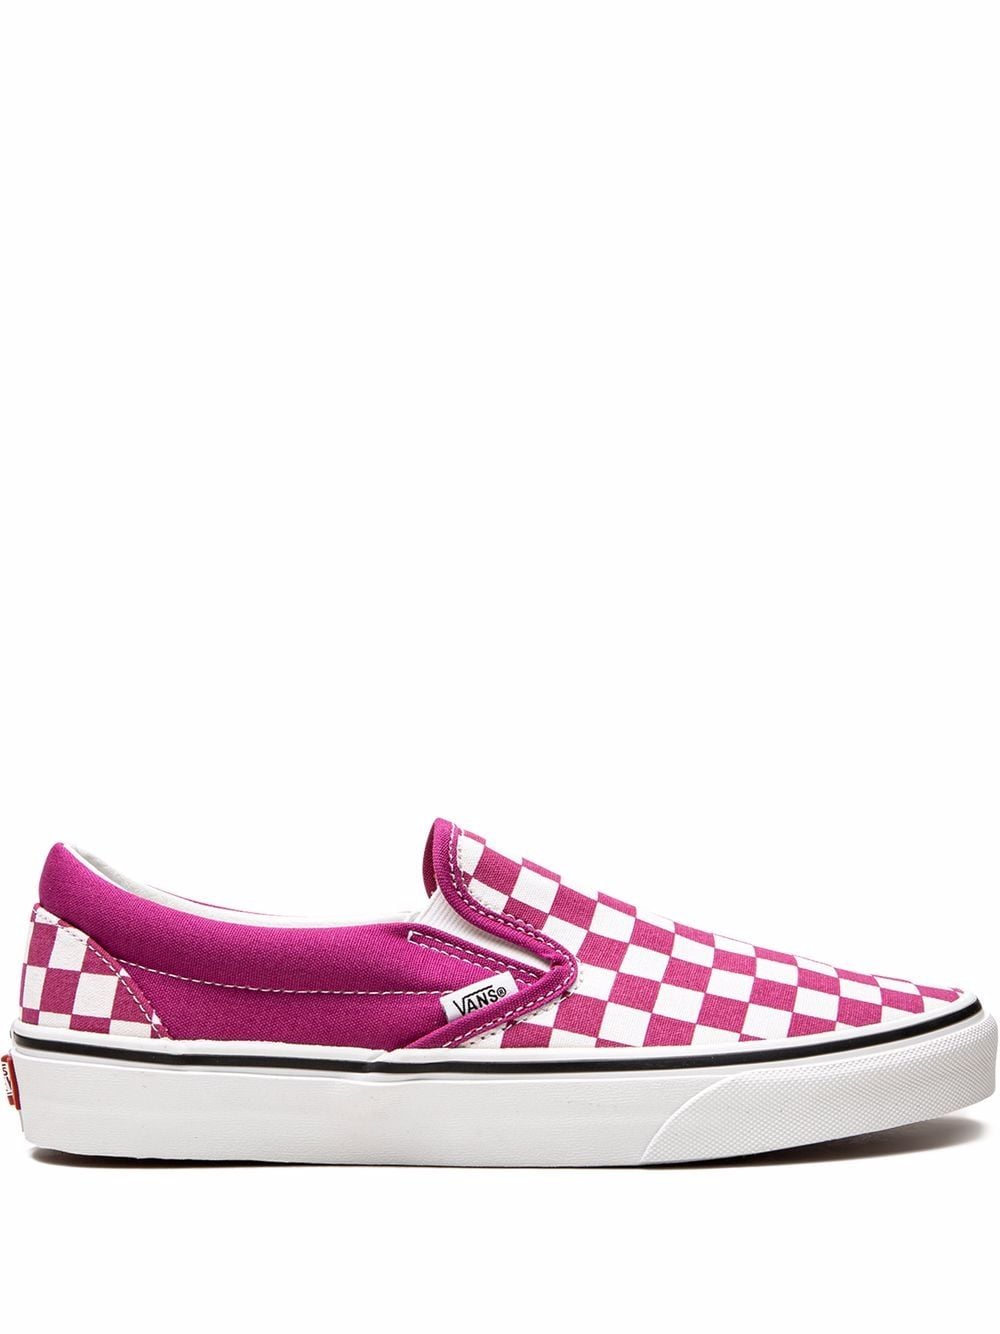 Vans Classic Slip-On "Fuchsia Checkerboard" sneakers - Pink von Vans